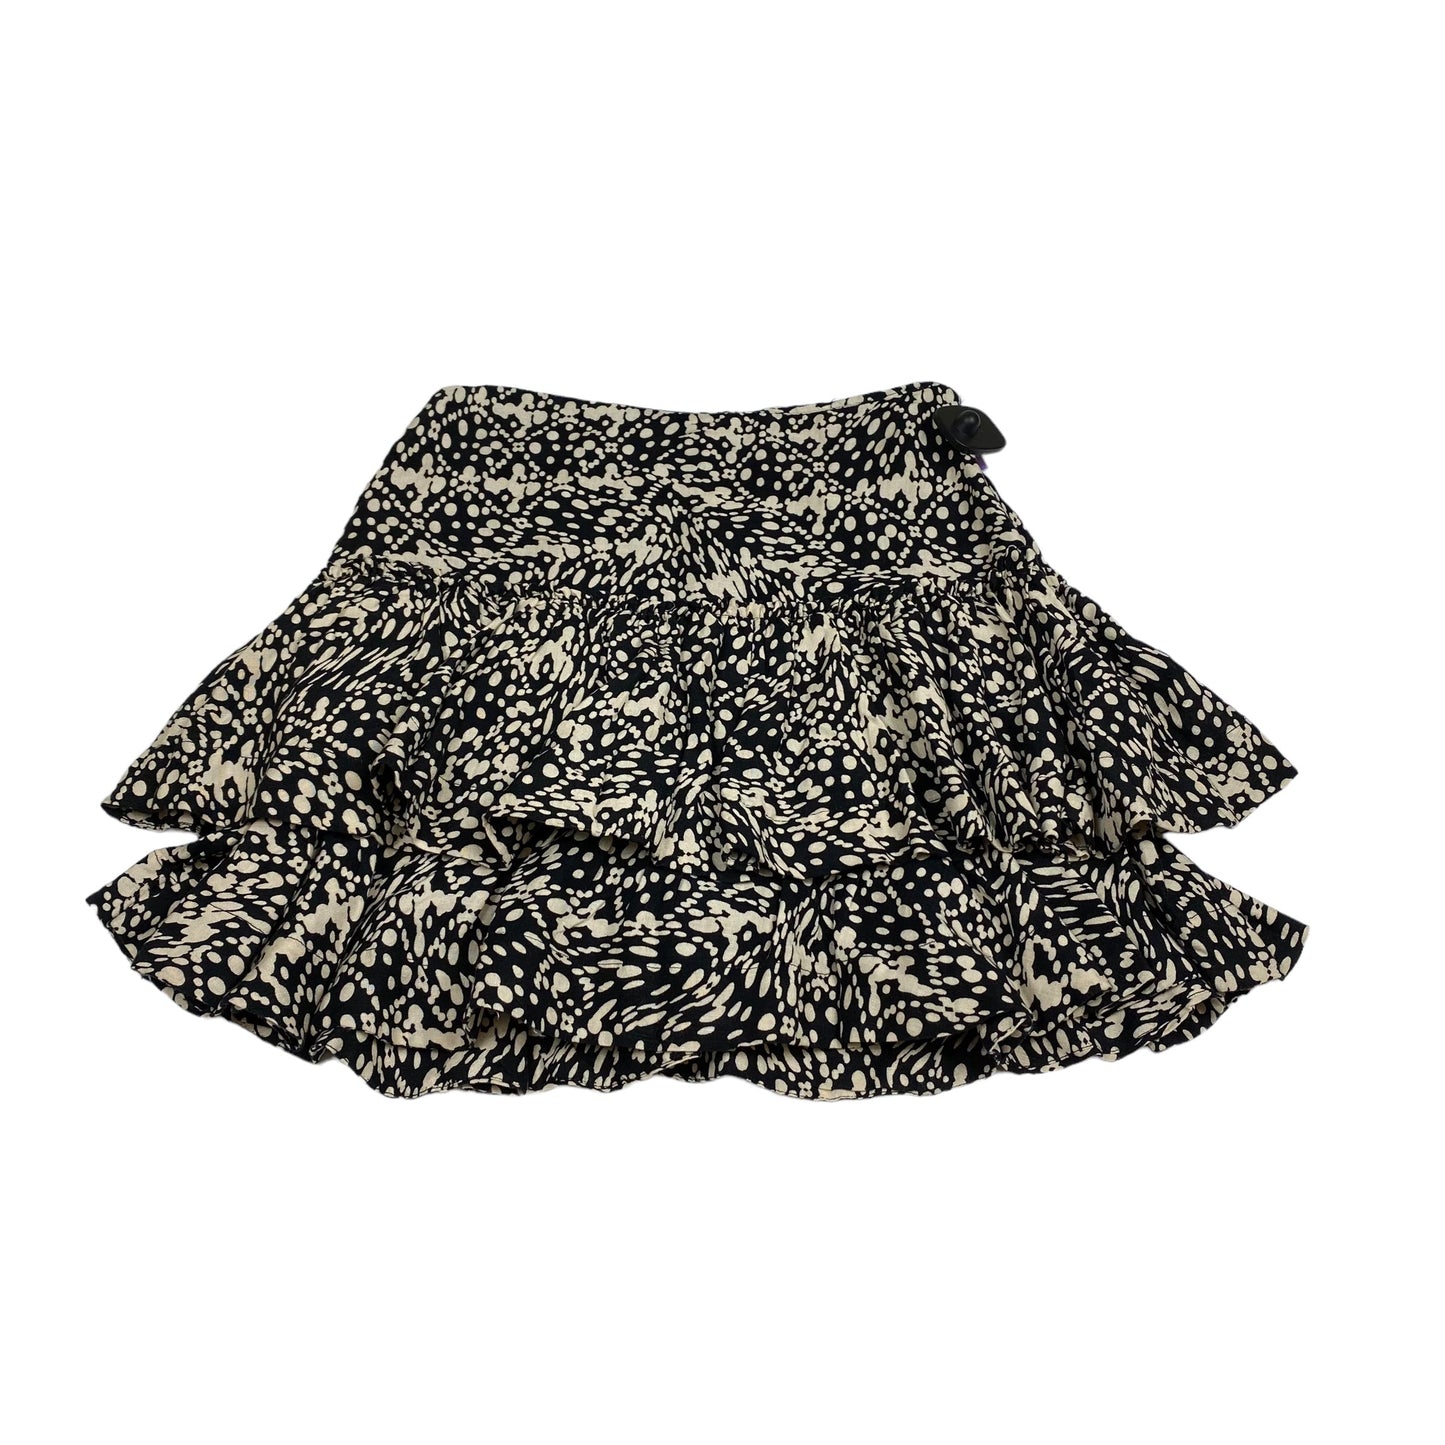 Skirt Mini & Short By Maeve  Size: 4